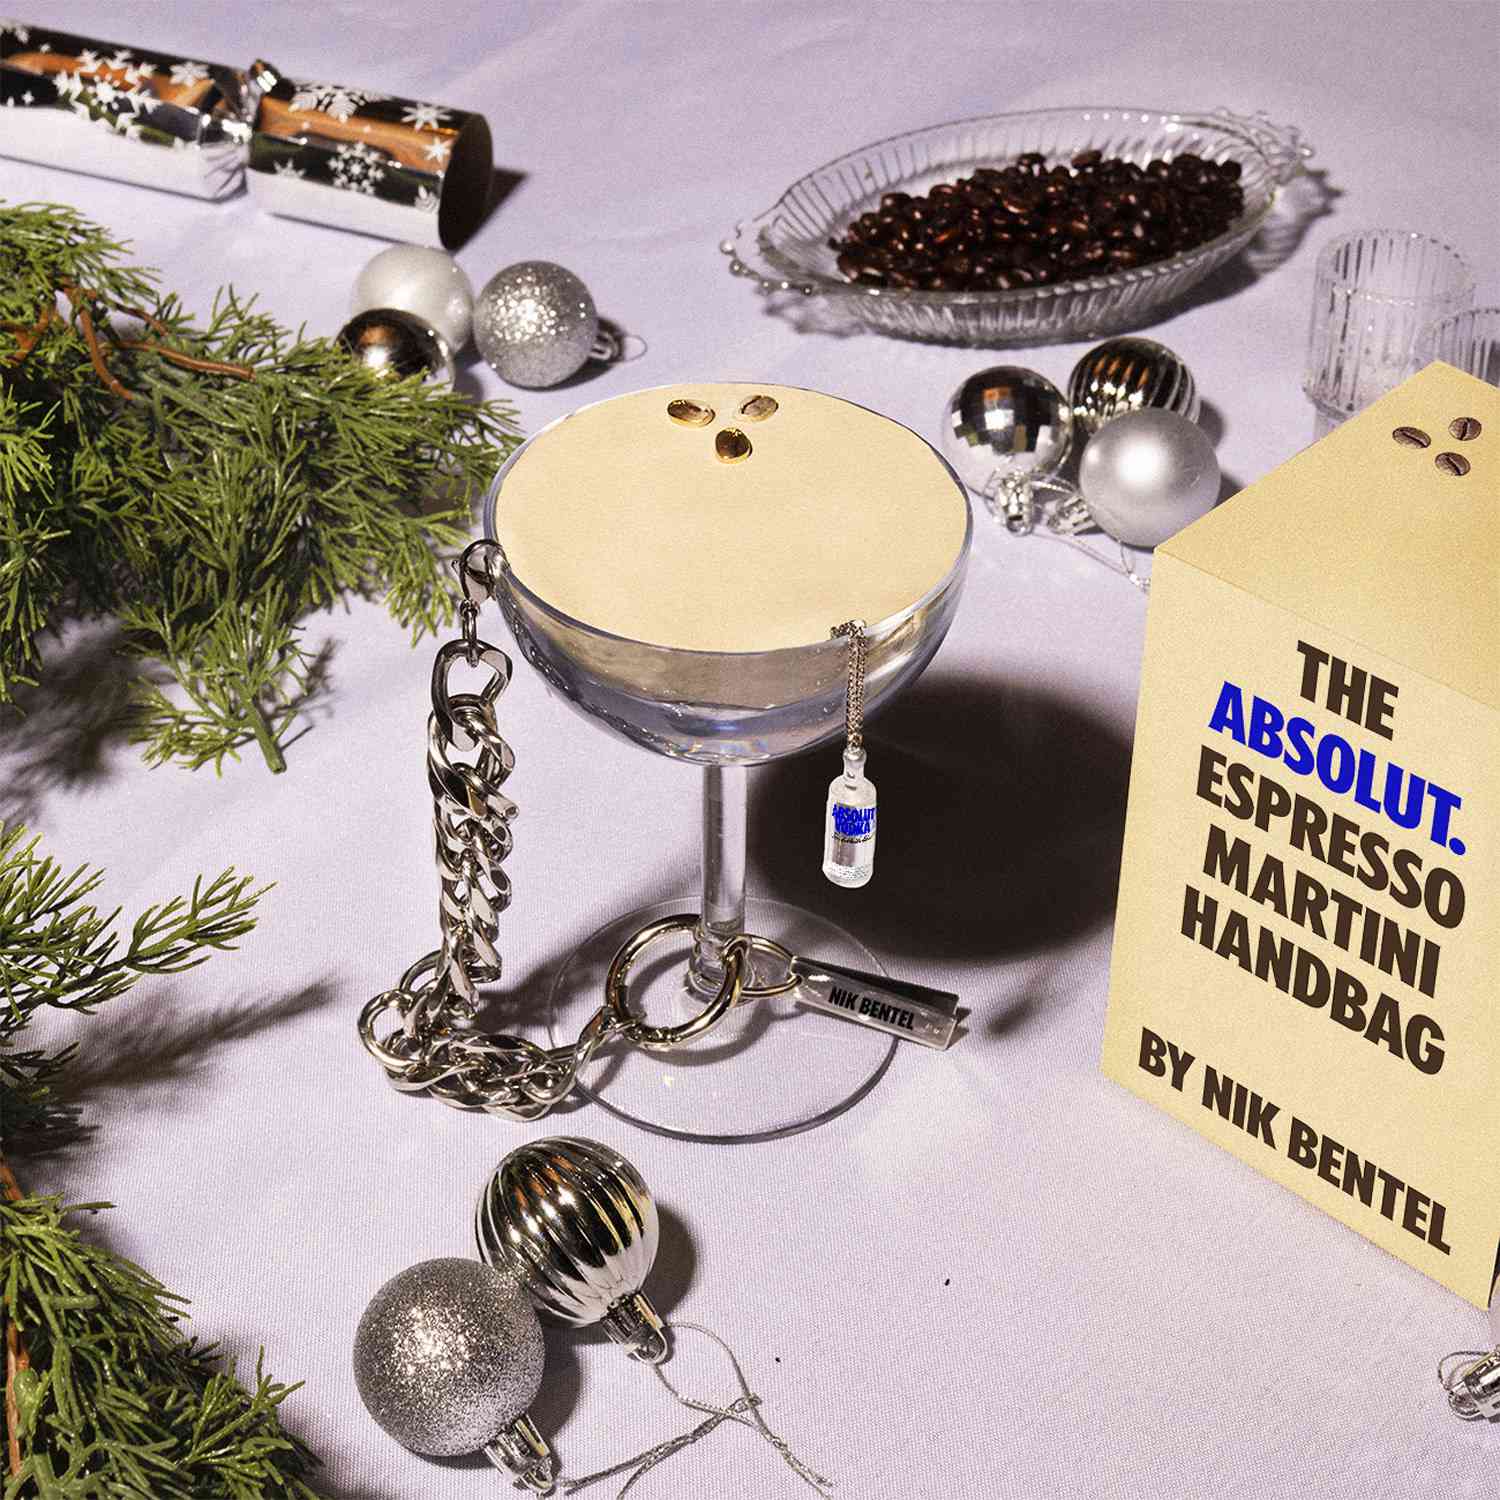 The Absolut Espresso Martini Handbag by Nik Bentel